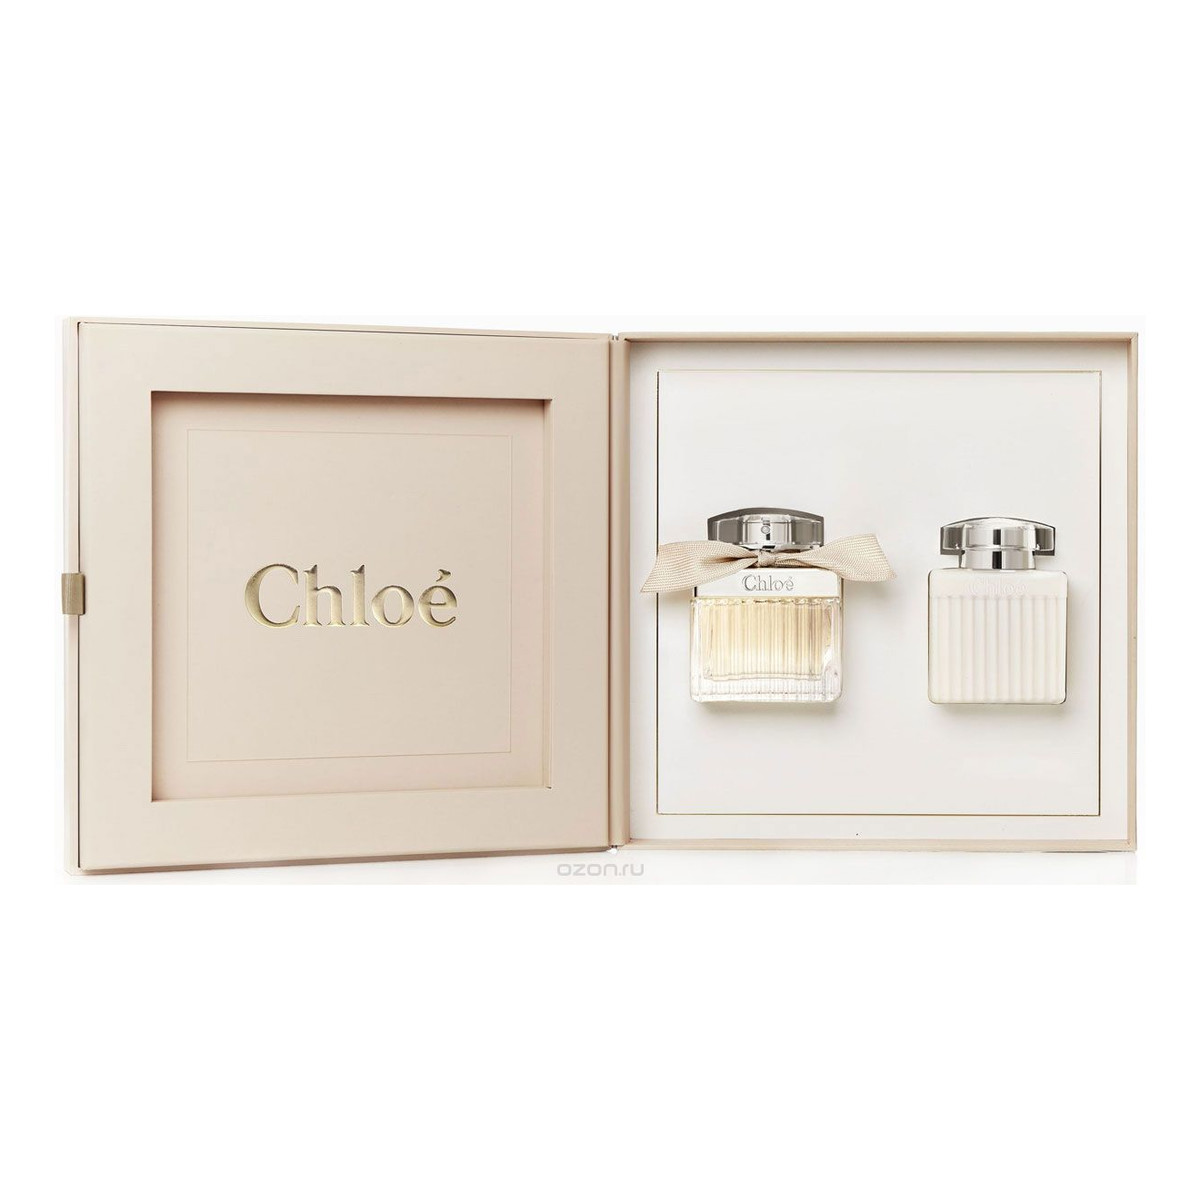 Chloe Chloe Signature zestaw (woda perfumowana 50ml + balsam do ciała 100ml)